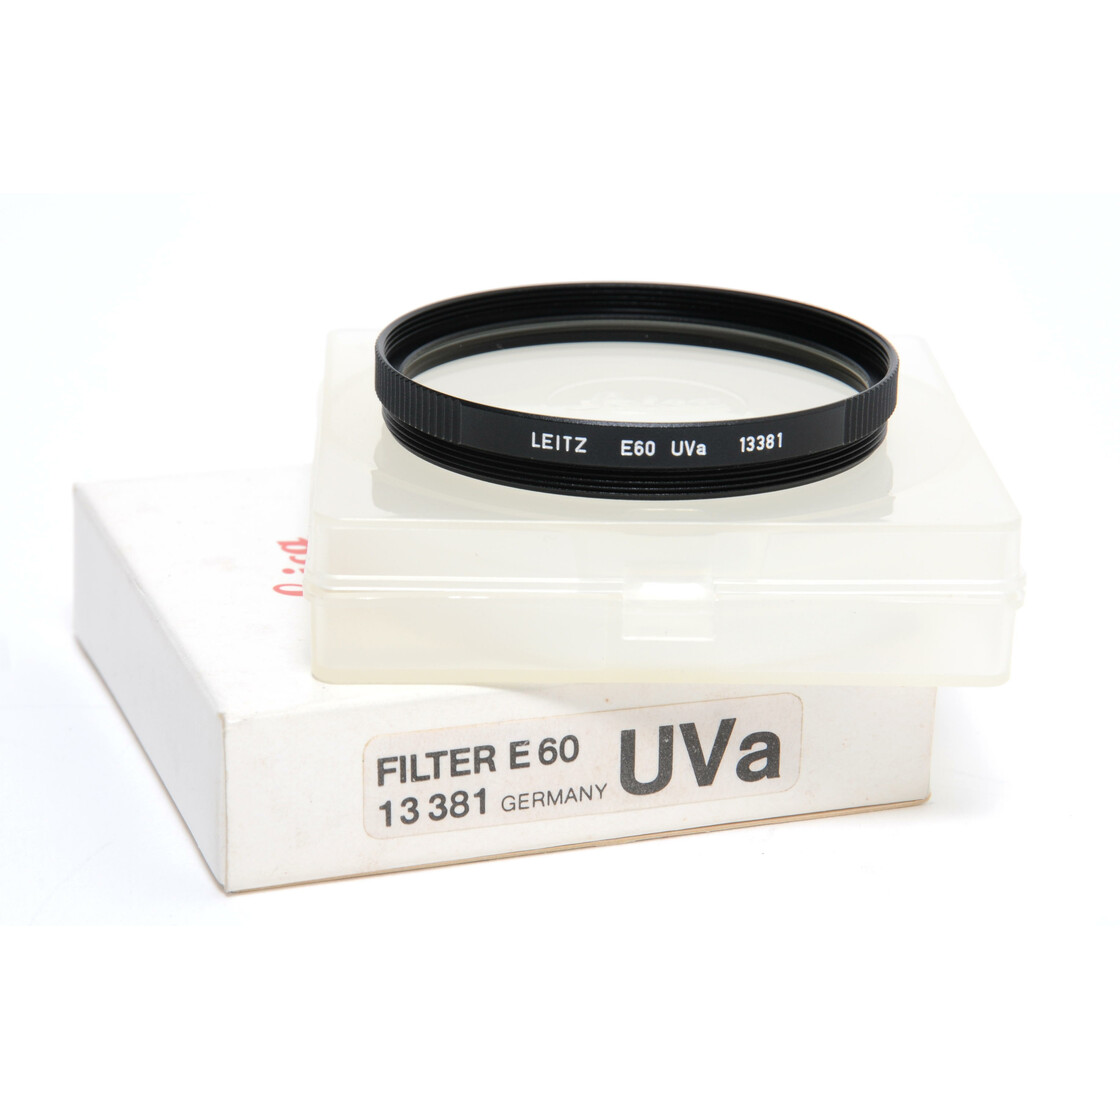 Leica Filter E60 UVa original boxed 13381 mint condition, 99,00 €